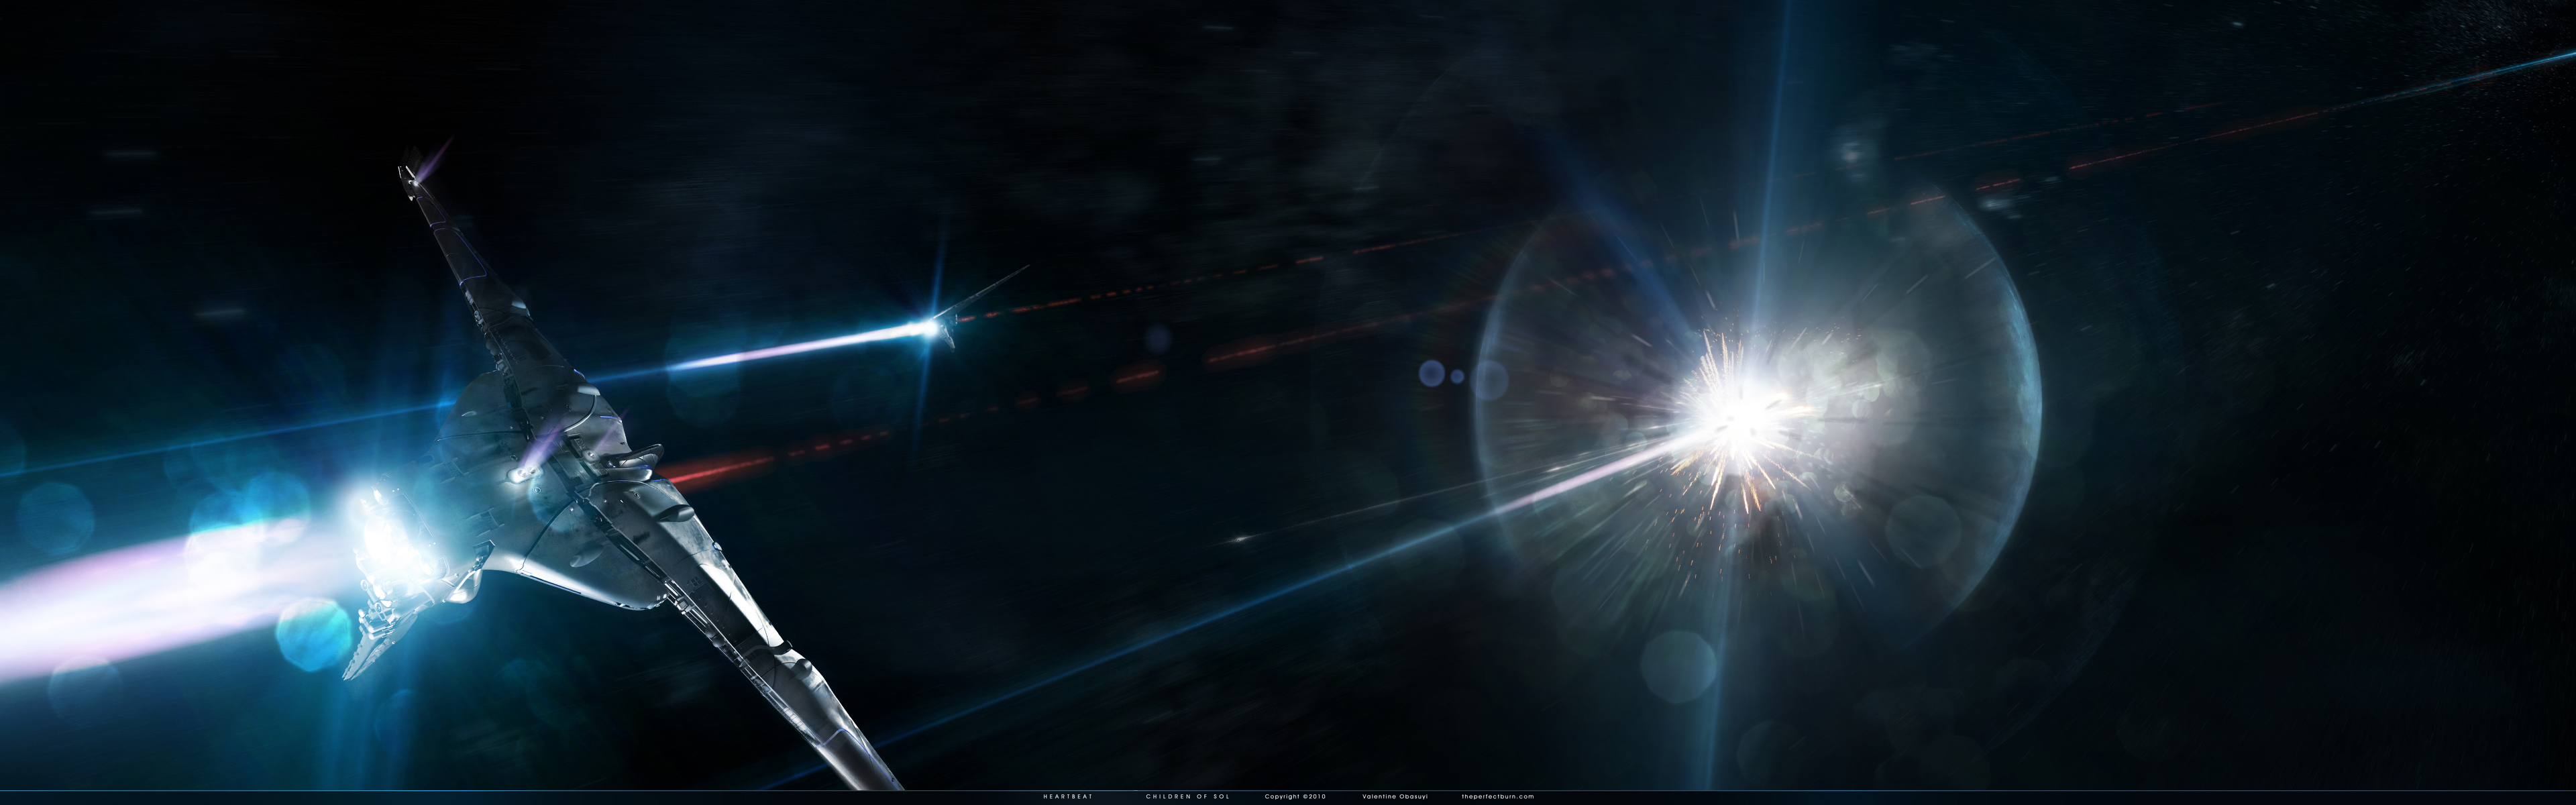 sci-fi action - desktop wallpaper